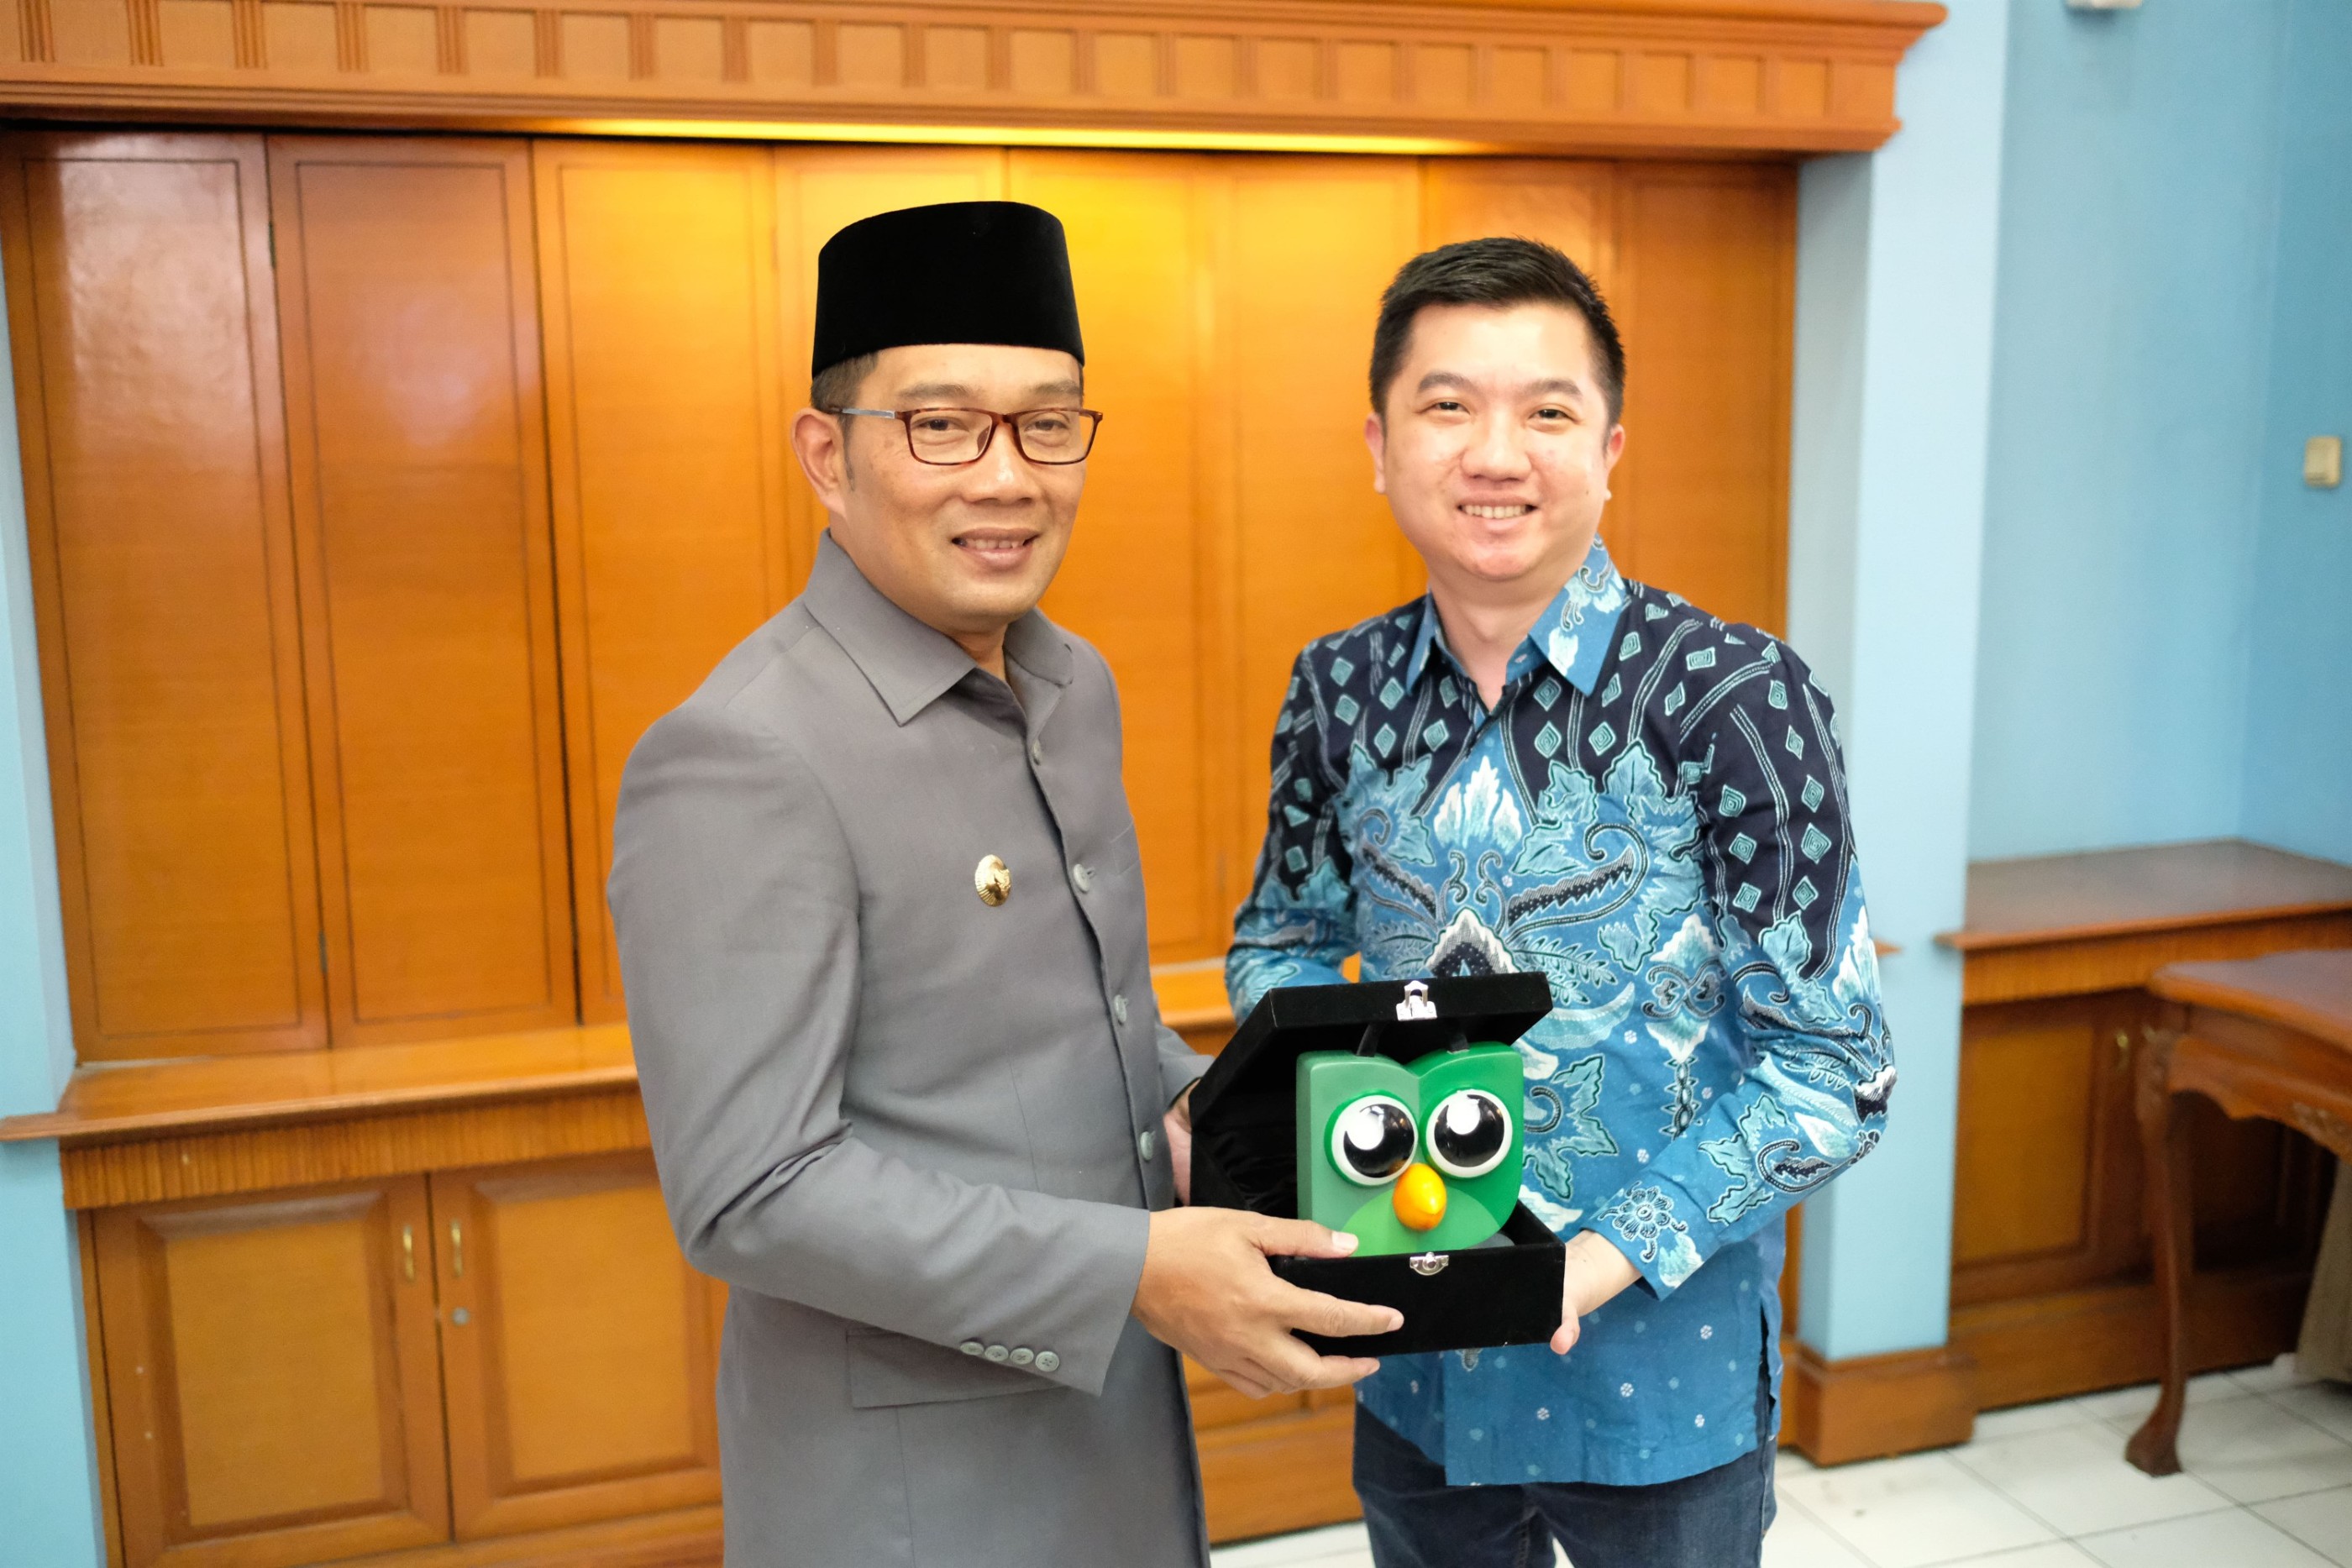 Tokopedia bekerja sama dengan Pemerintah Provinsi Jawa Barat untuk mengembangkan pelayanan publik dan ekonomi digital di Jawa Barat